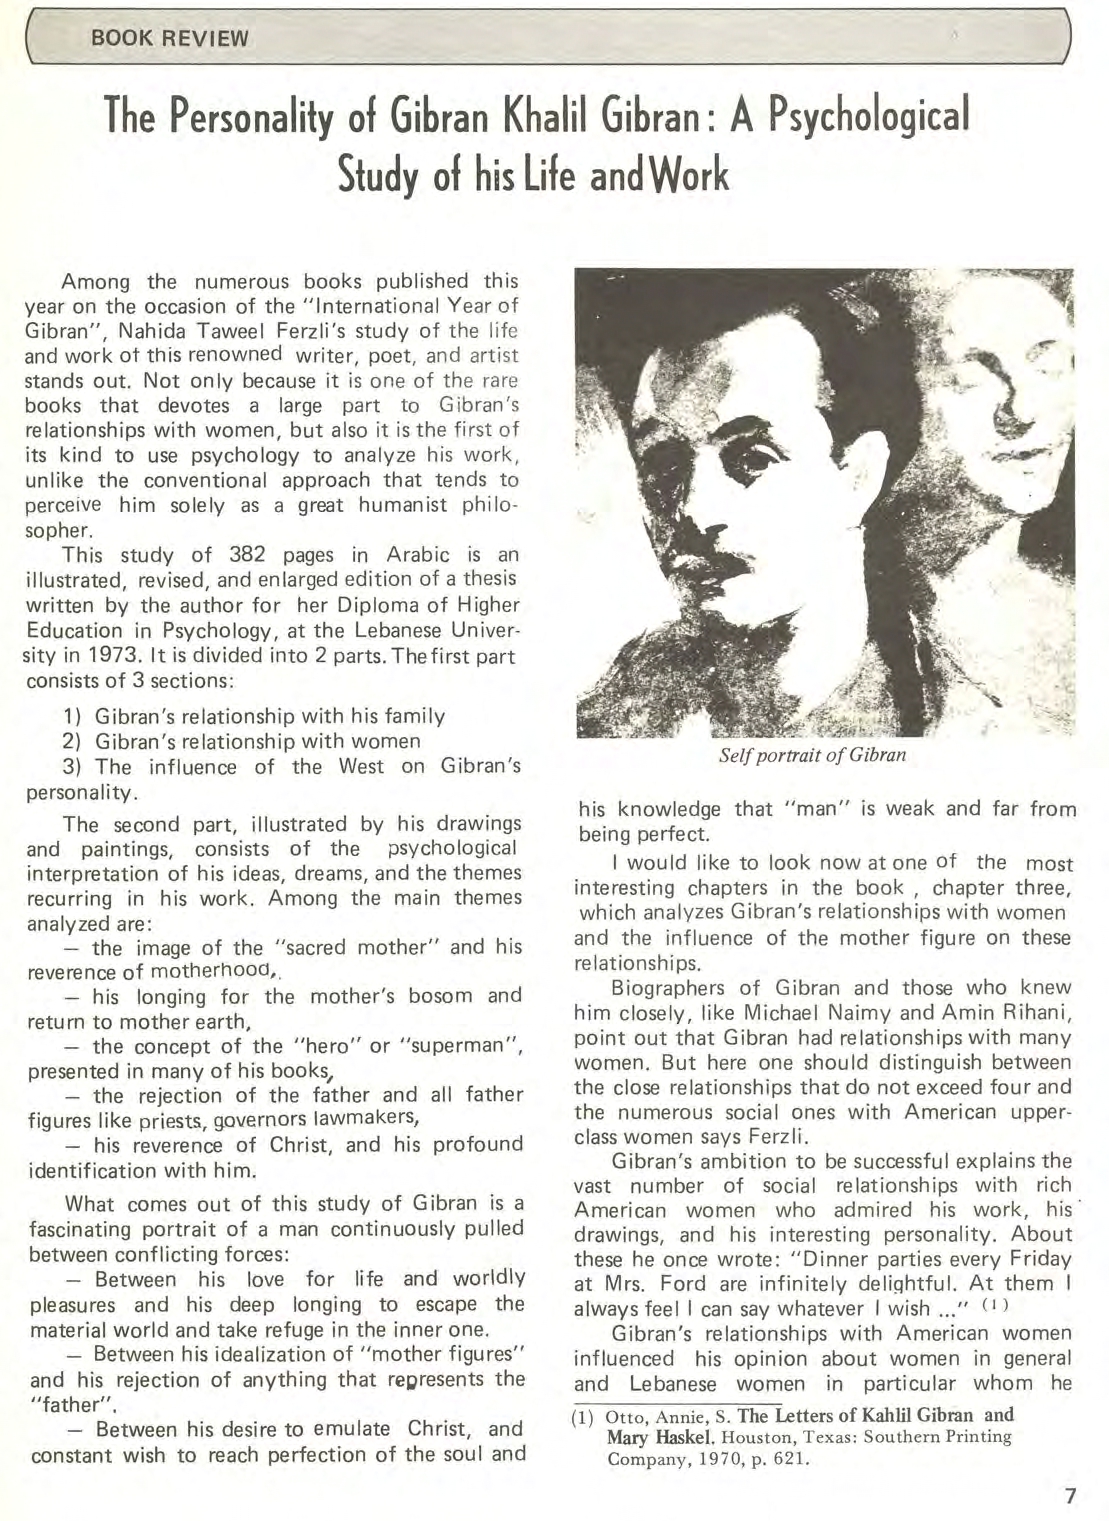 Wafa' Stephan, The Personality of Gibran Khalil Gibran: A Psychological Study of his Life and Work [book review], Al-Raida, November 1, 1983